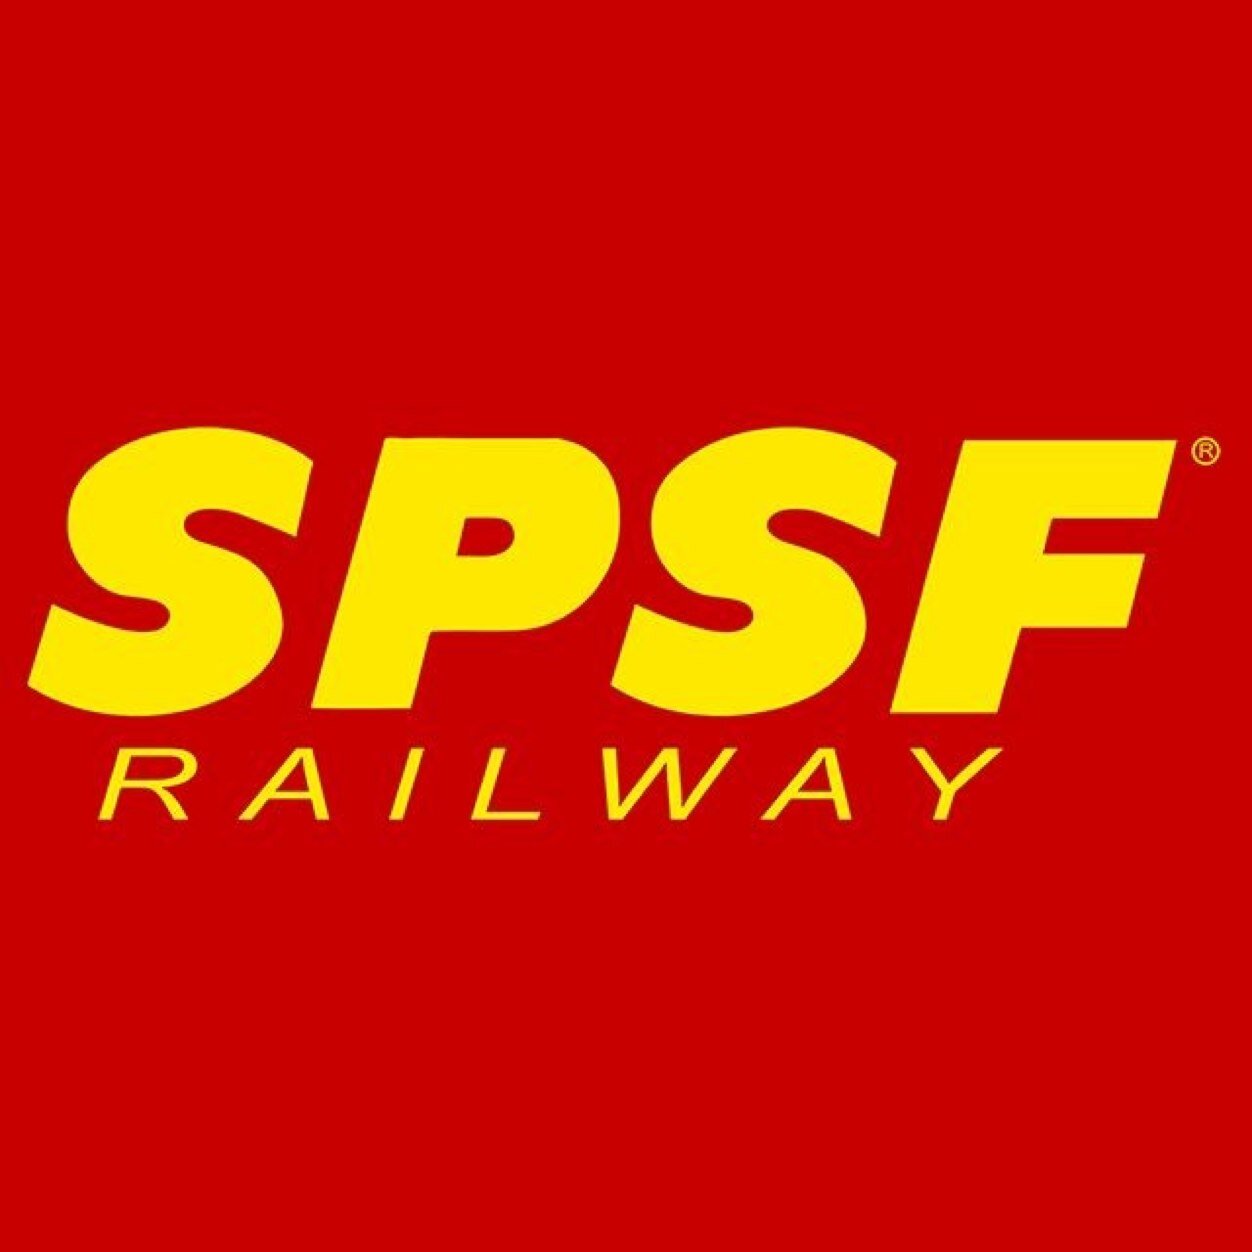 SPSF Railway